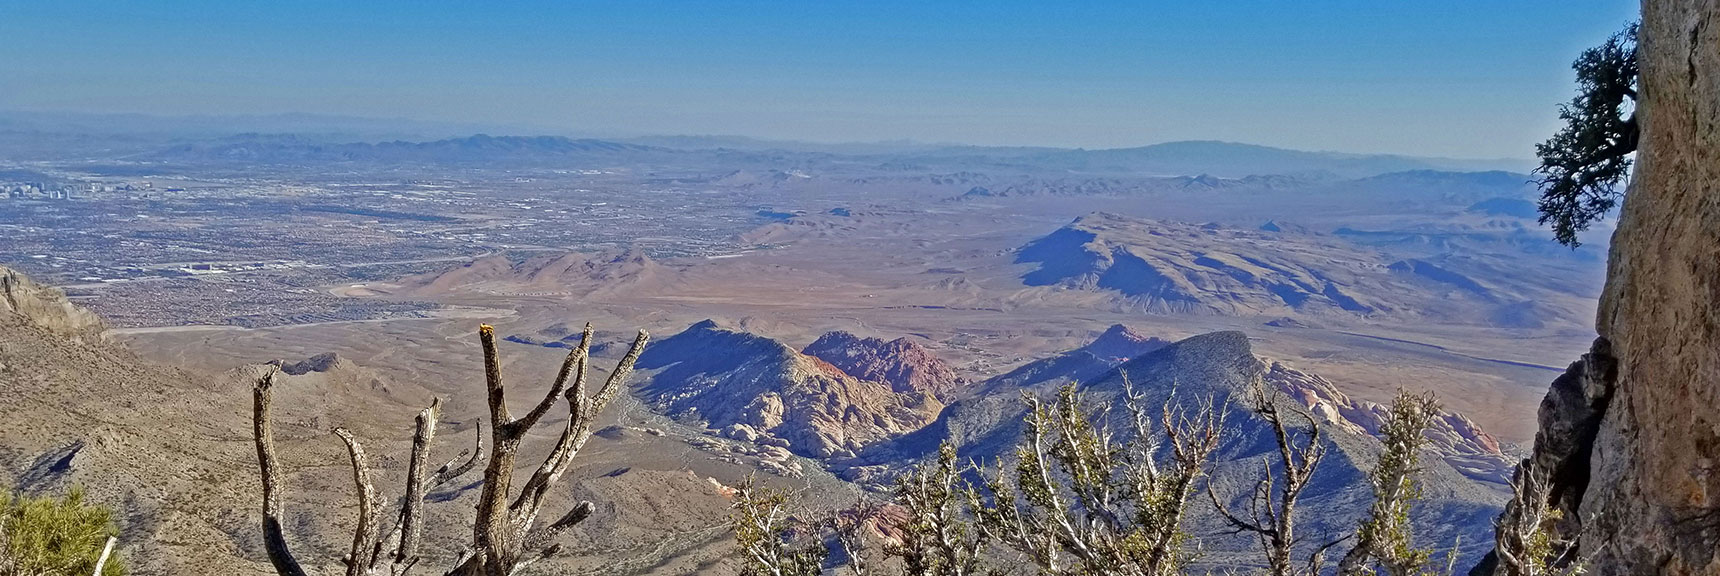 Calico Hills, Turtlehead Peak, Blue Diamond Mt and Las Vegas Valley | La Madre Mountain,, El Padre Mountain, Burnt Peak | La Madre Mountains Wilderness, Nevada